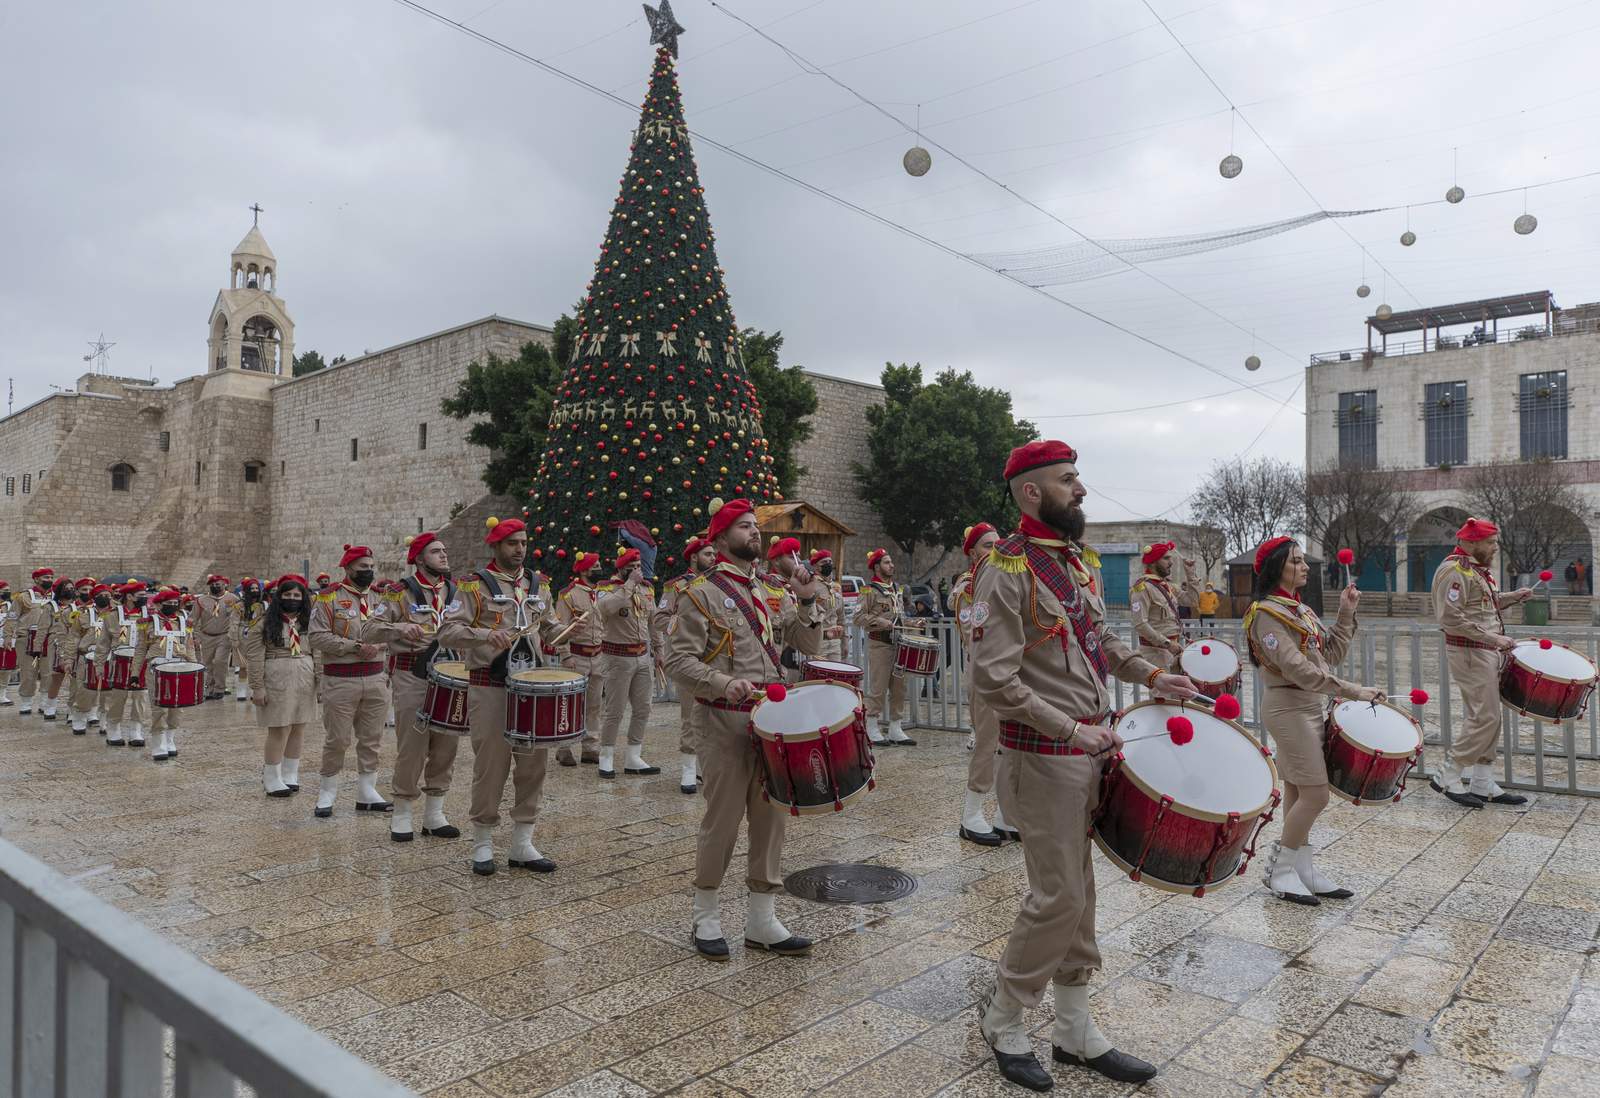 Coronavirus dampens Christmas joy in Bethlehem and elsewhere